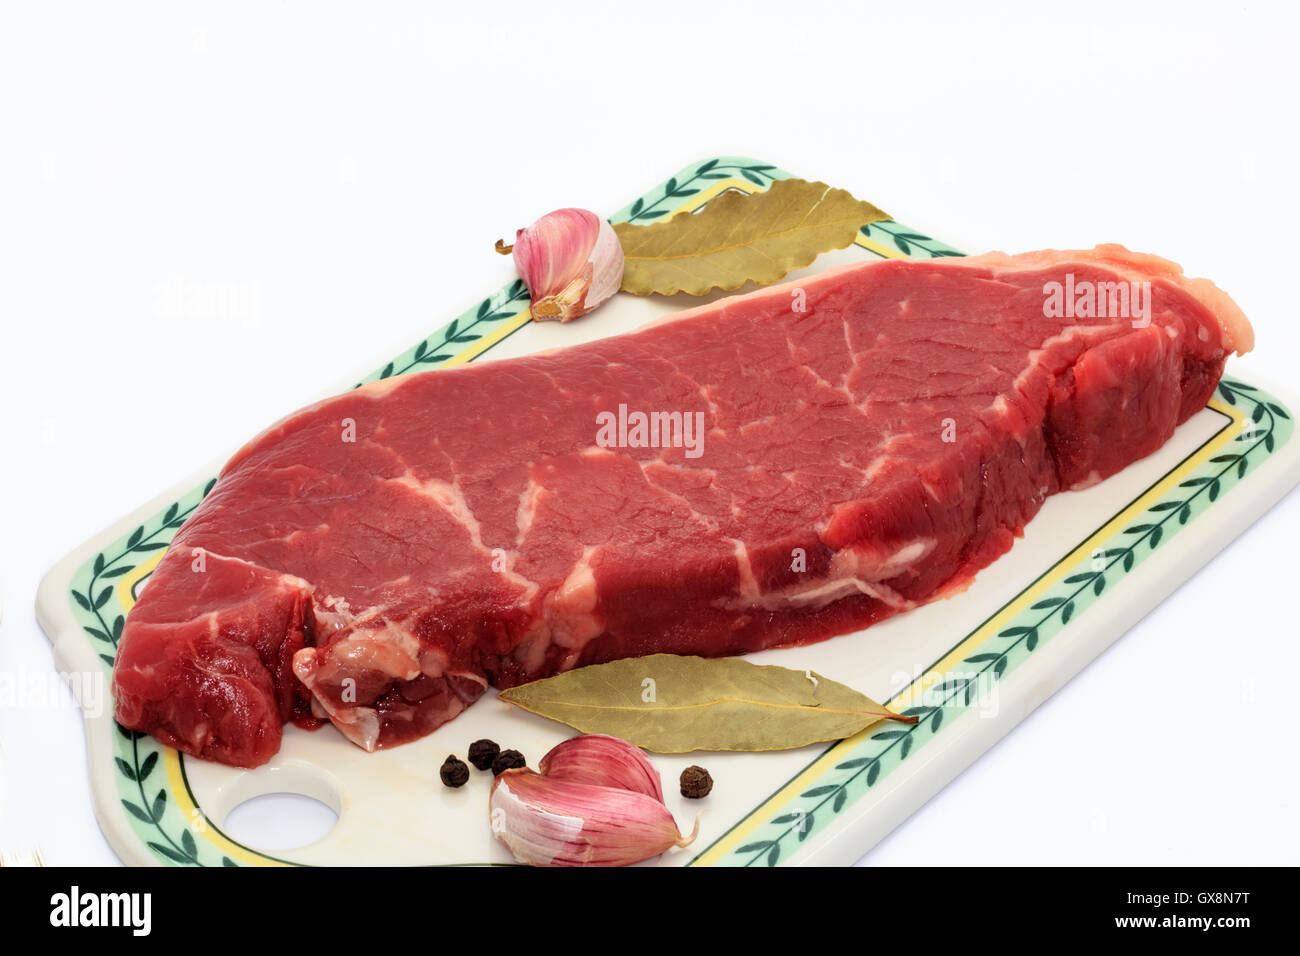 Sirloin steak on a ceramic board. Stock Photo